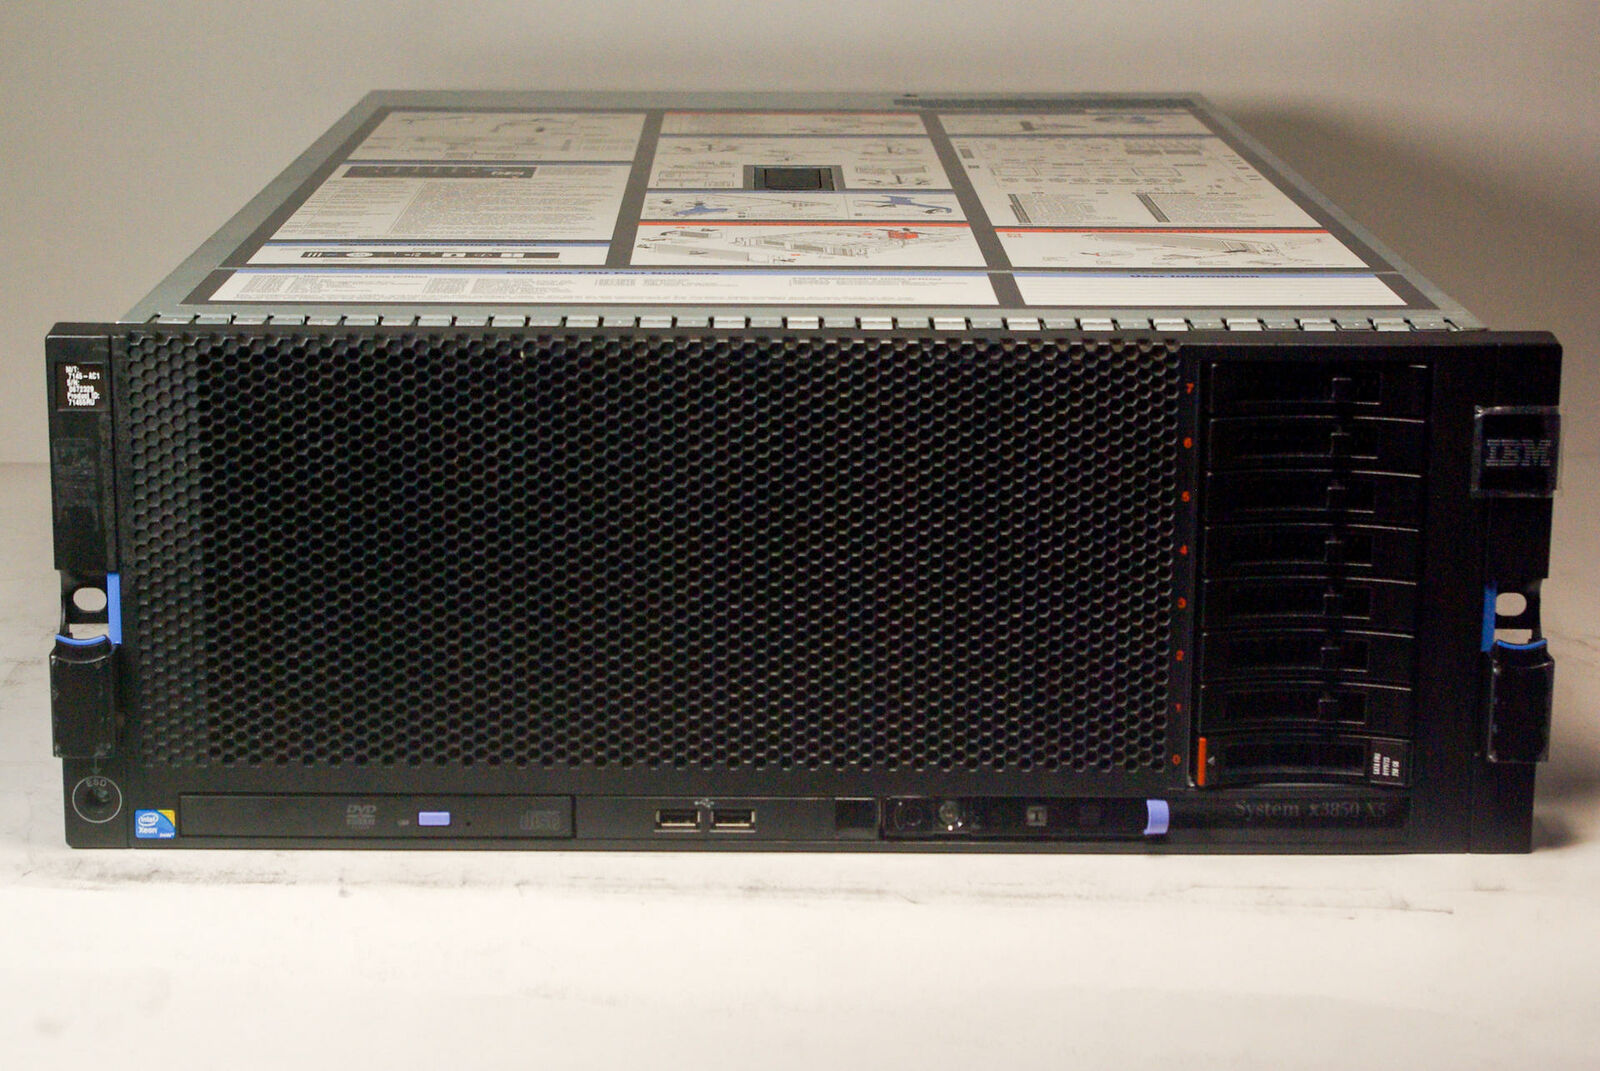 IBM System X3850 X5 Server Quad Xeon X7560 8 CORE 2.27GHz 512GB DDR3